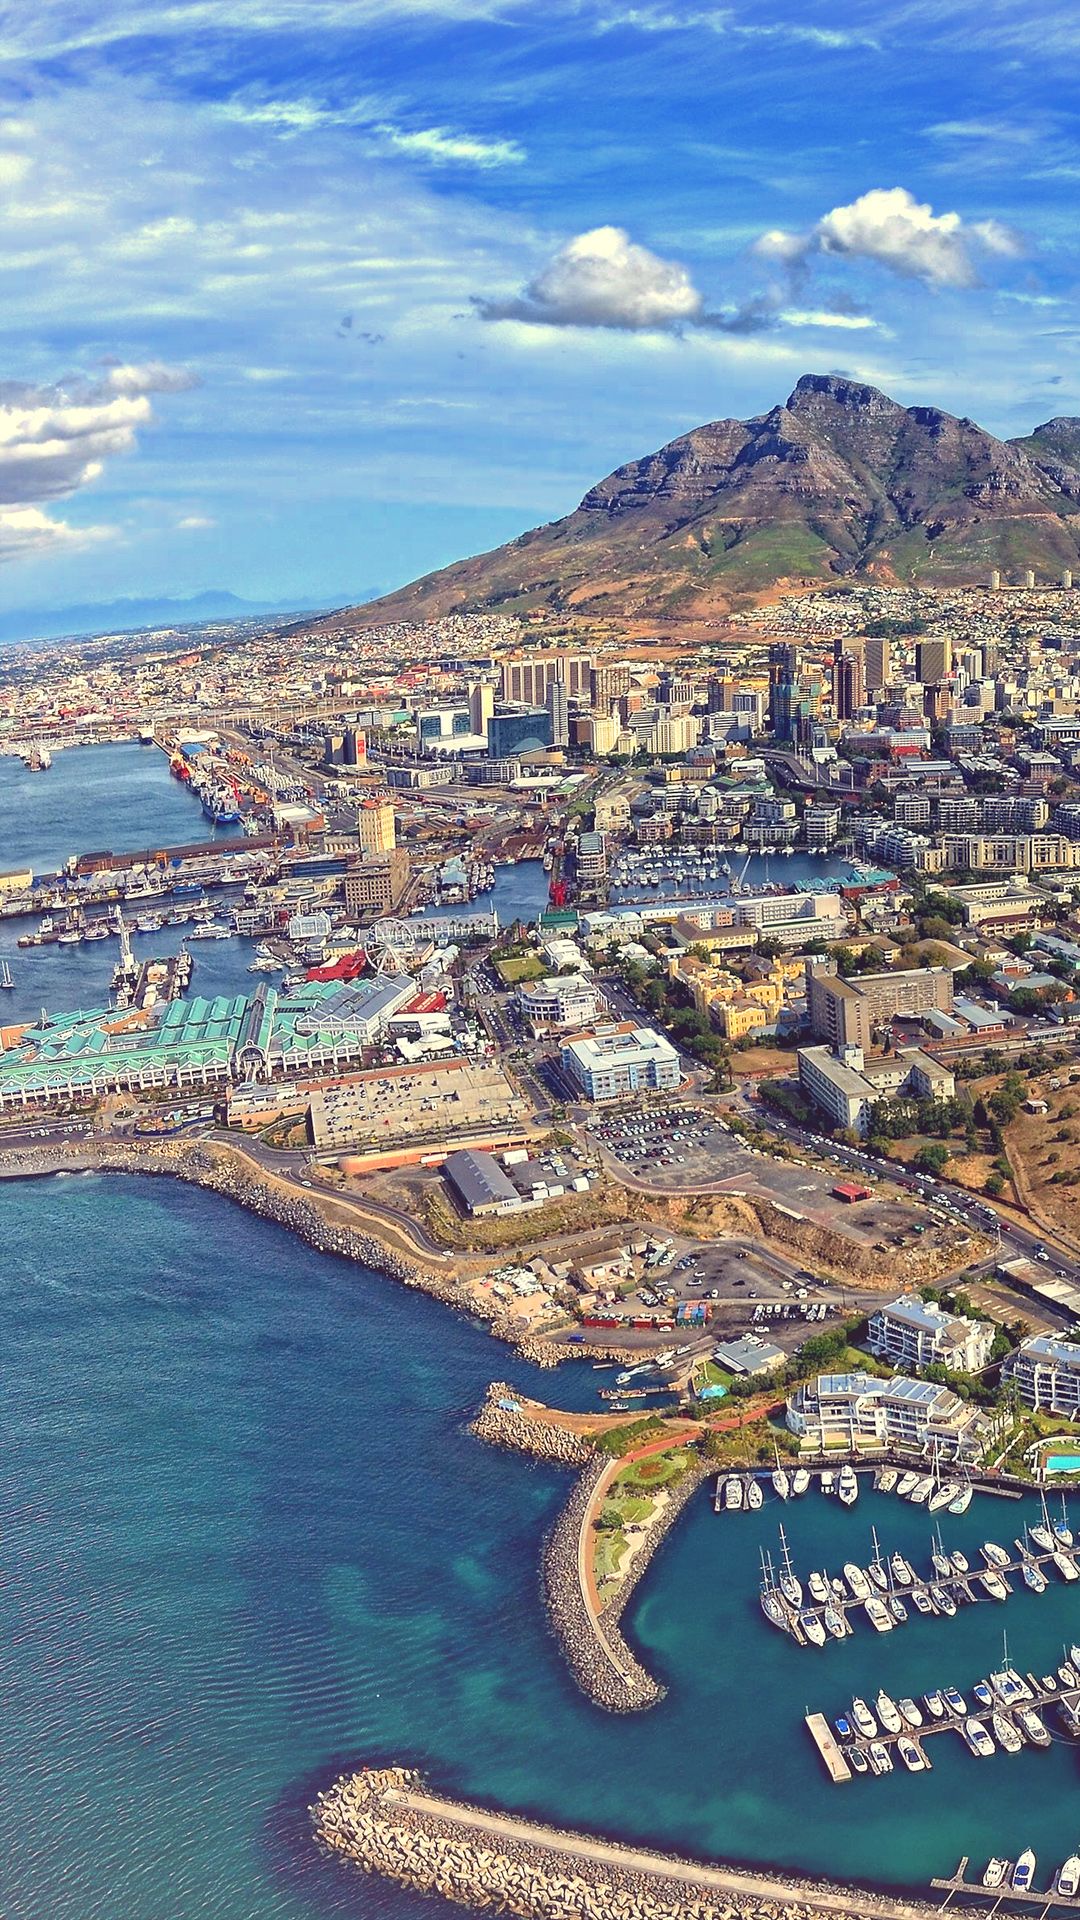 Cape Town Papel de parede Table Mountain foto compartilhado por Dinnie   Português de partilha de imagens imagens